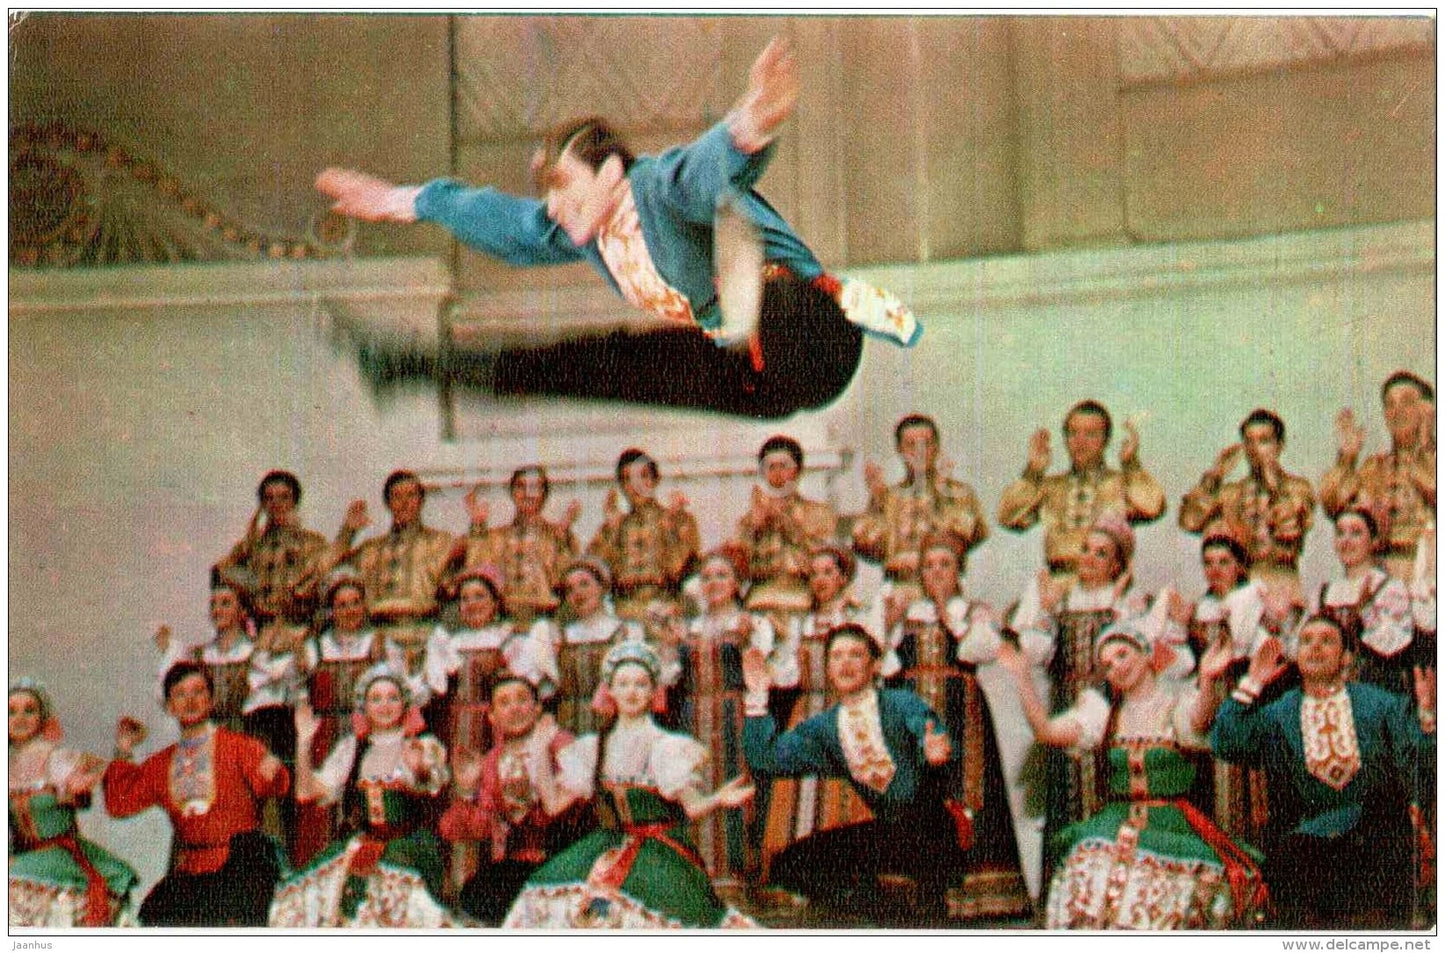 The Russian Folk Dance - The Pyatnitsky Russian Folk Chorus - 1976 - Russia USSR - unused - JH Postcards